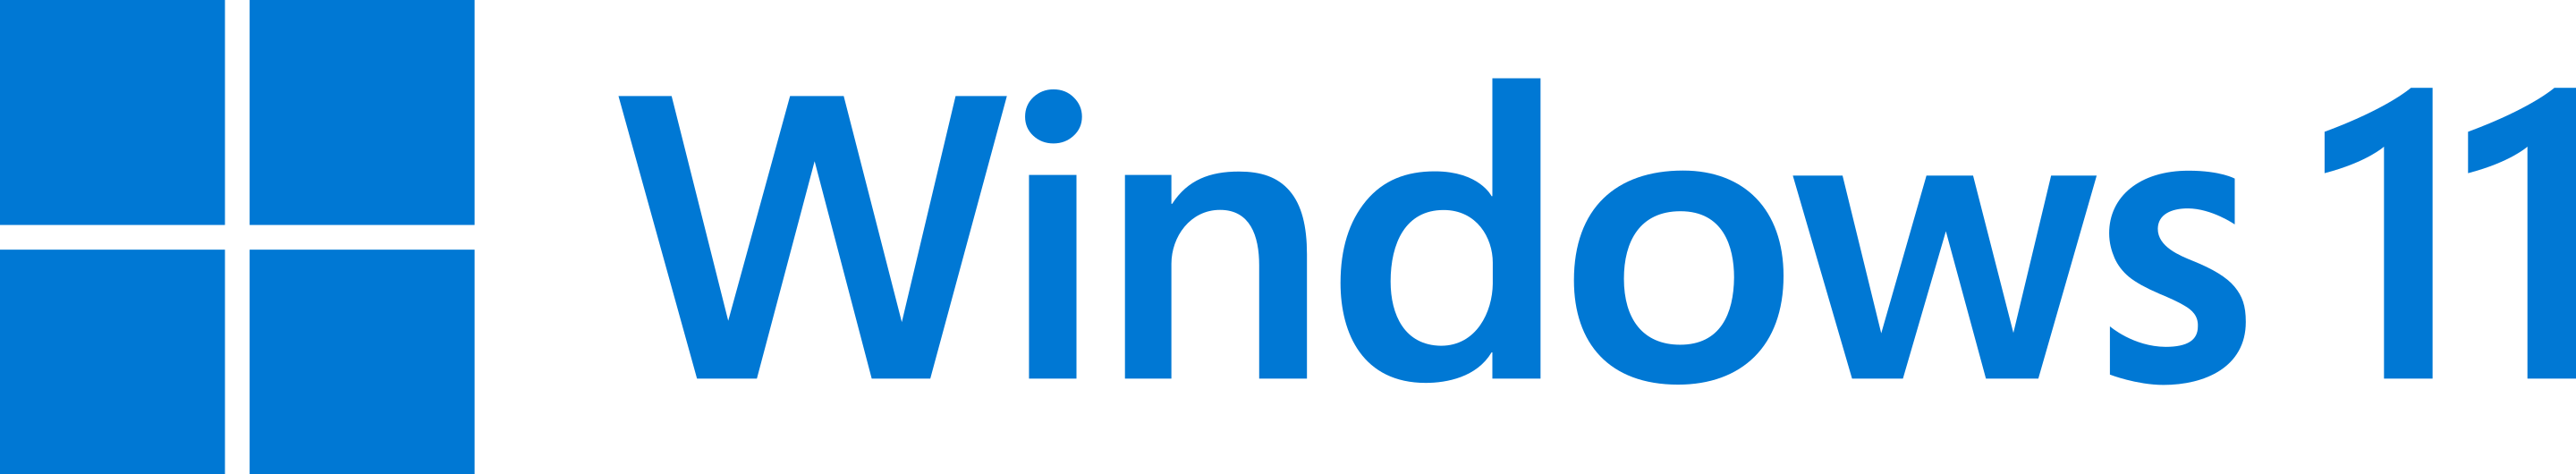 Windows 11 logosvg